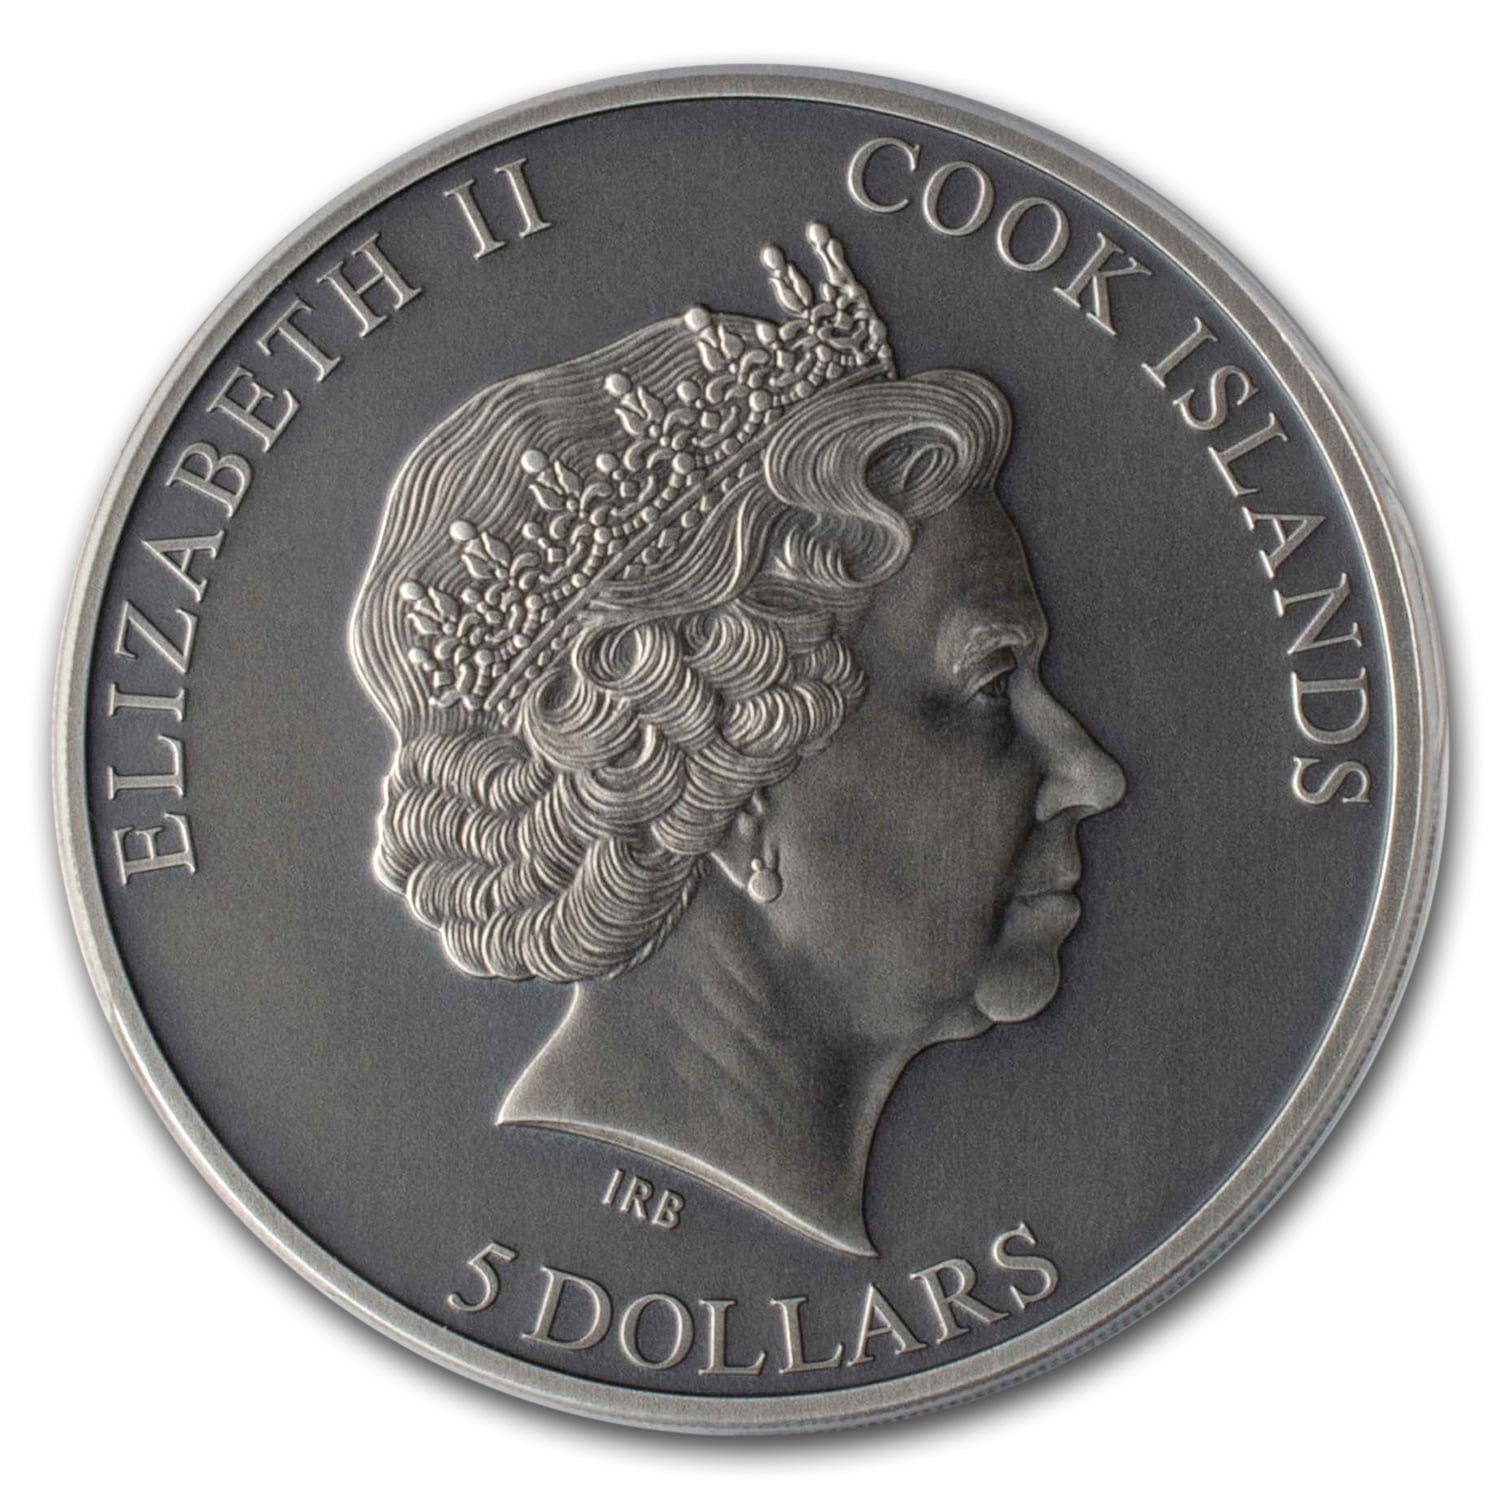 CK 2018 Cook Islands 1/2 oz Silver Coin Erfoud Meteorite Choice Uncirculated 